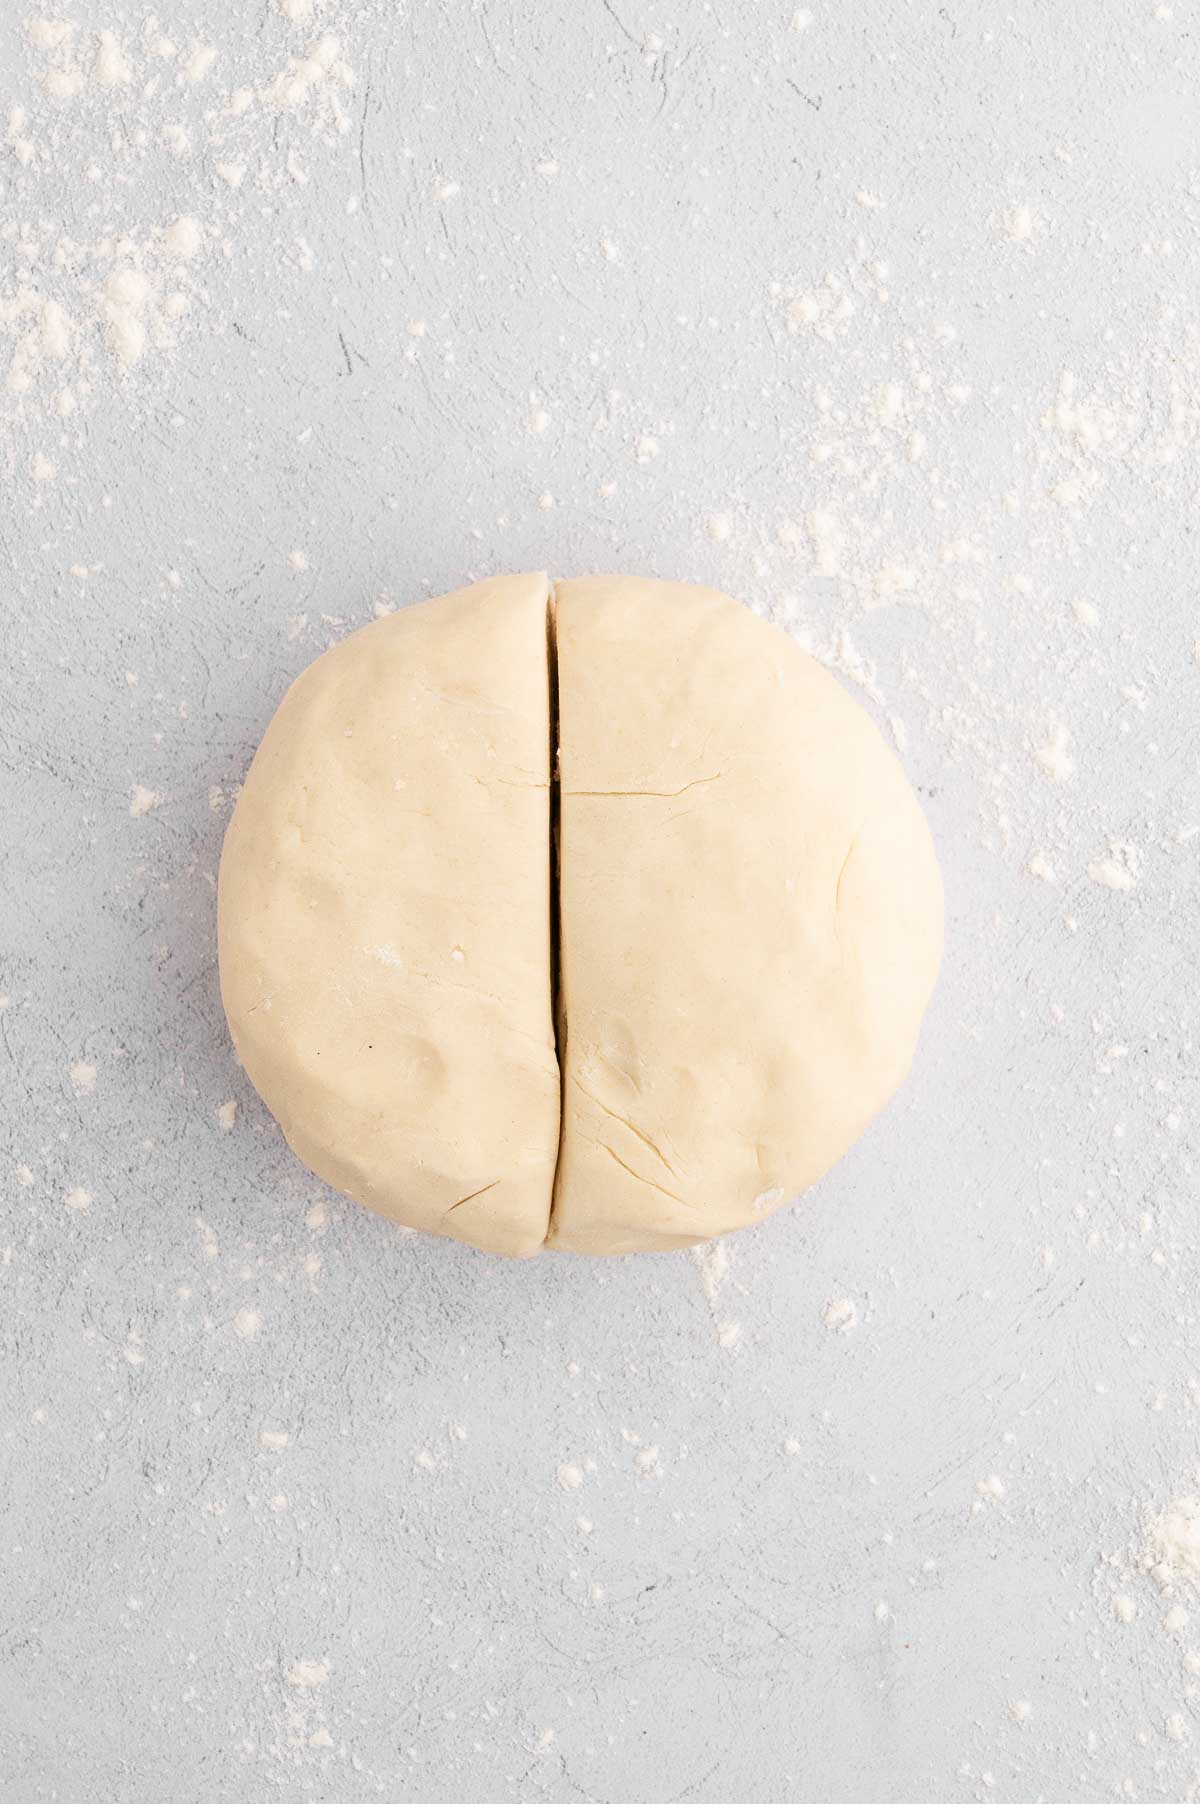 The rolled vegan pie crust dough sliced in half.